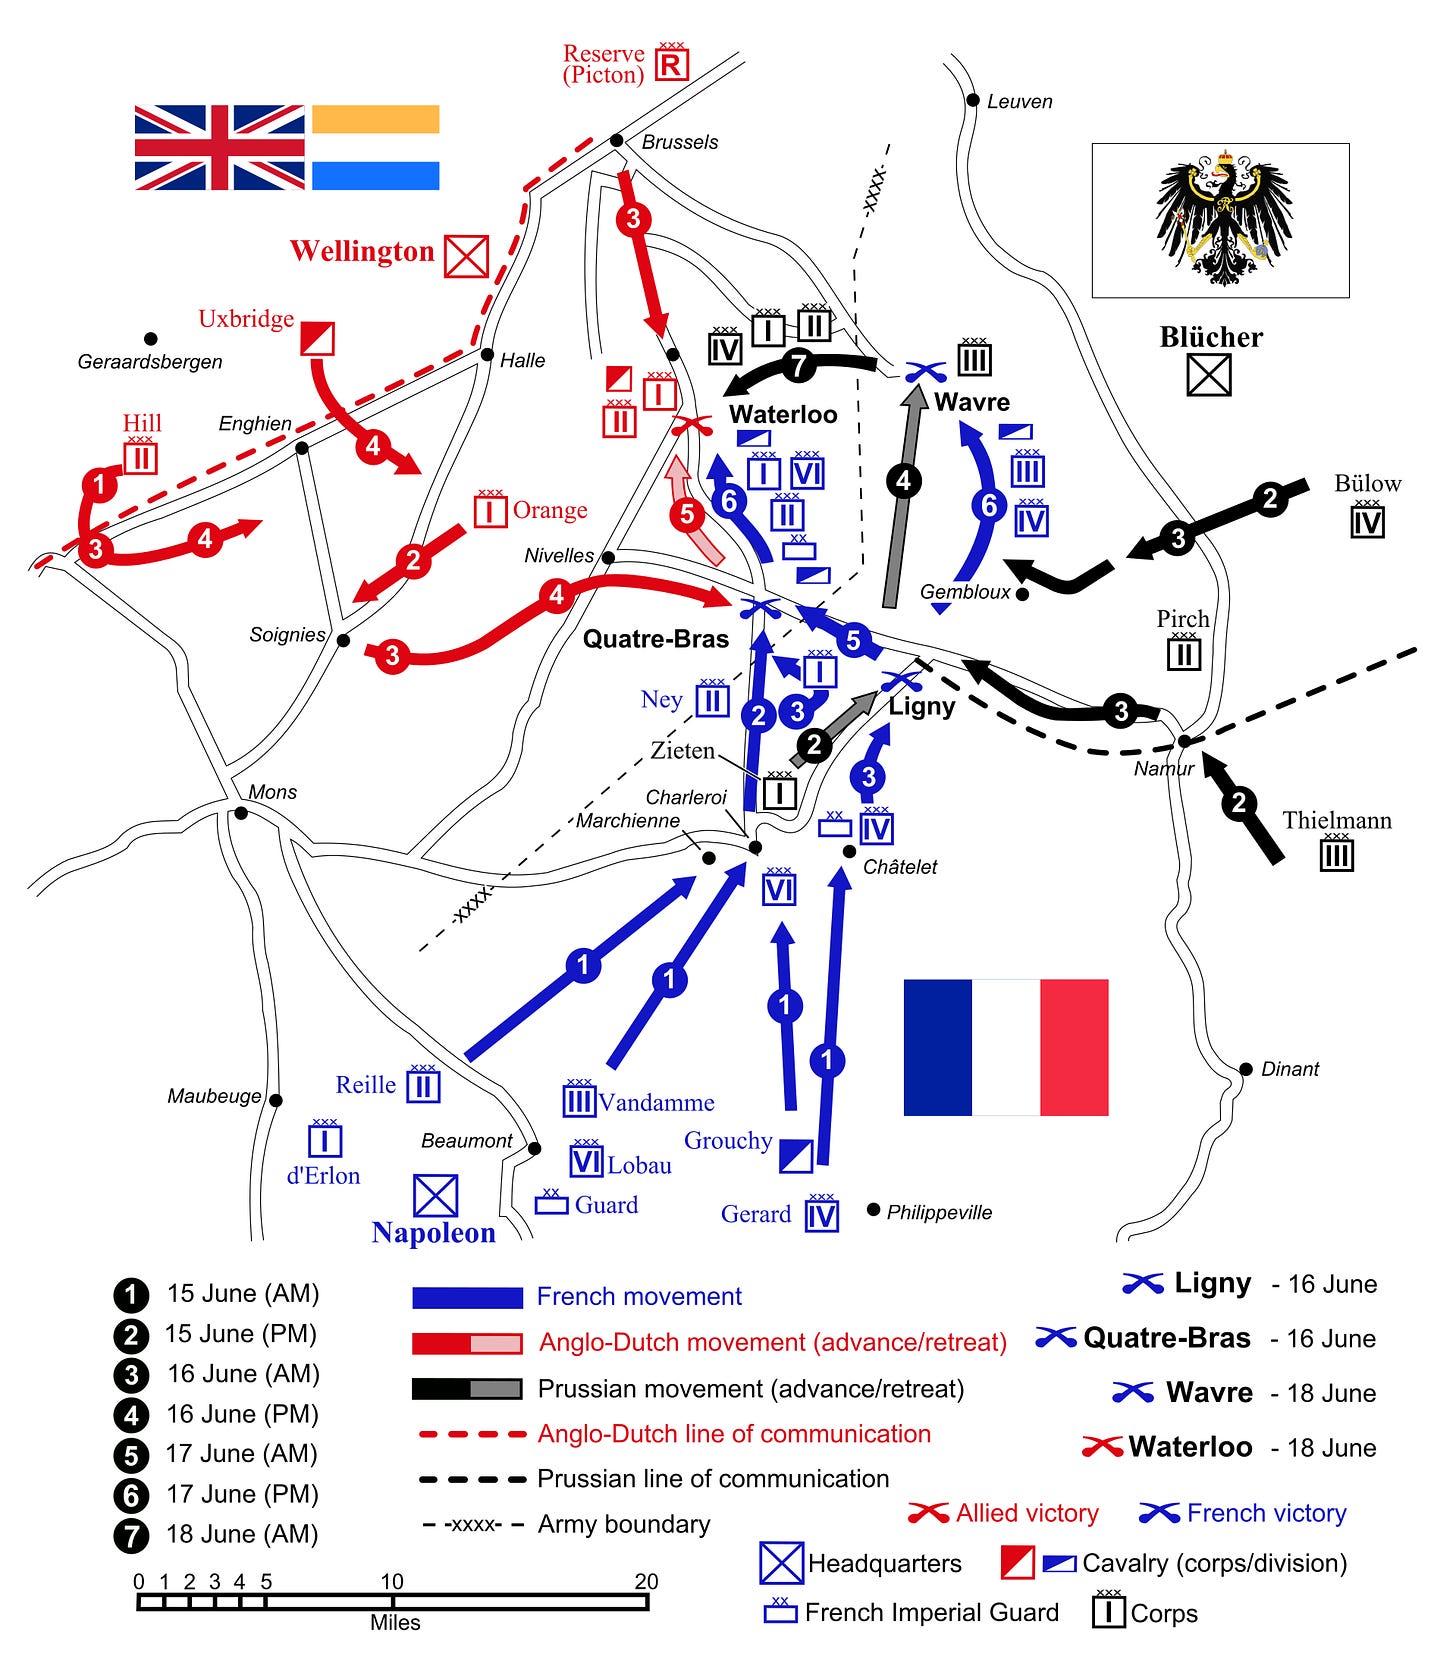 Battle strategy map of the battle of Waterloo.